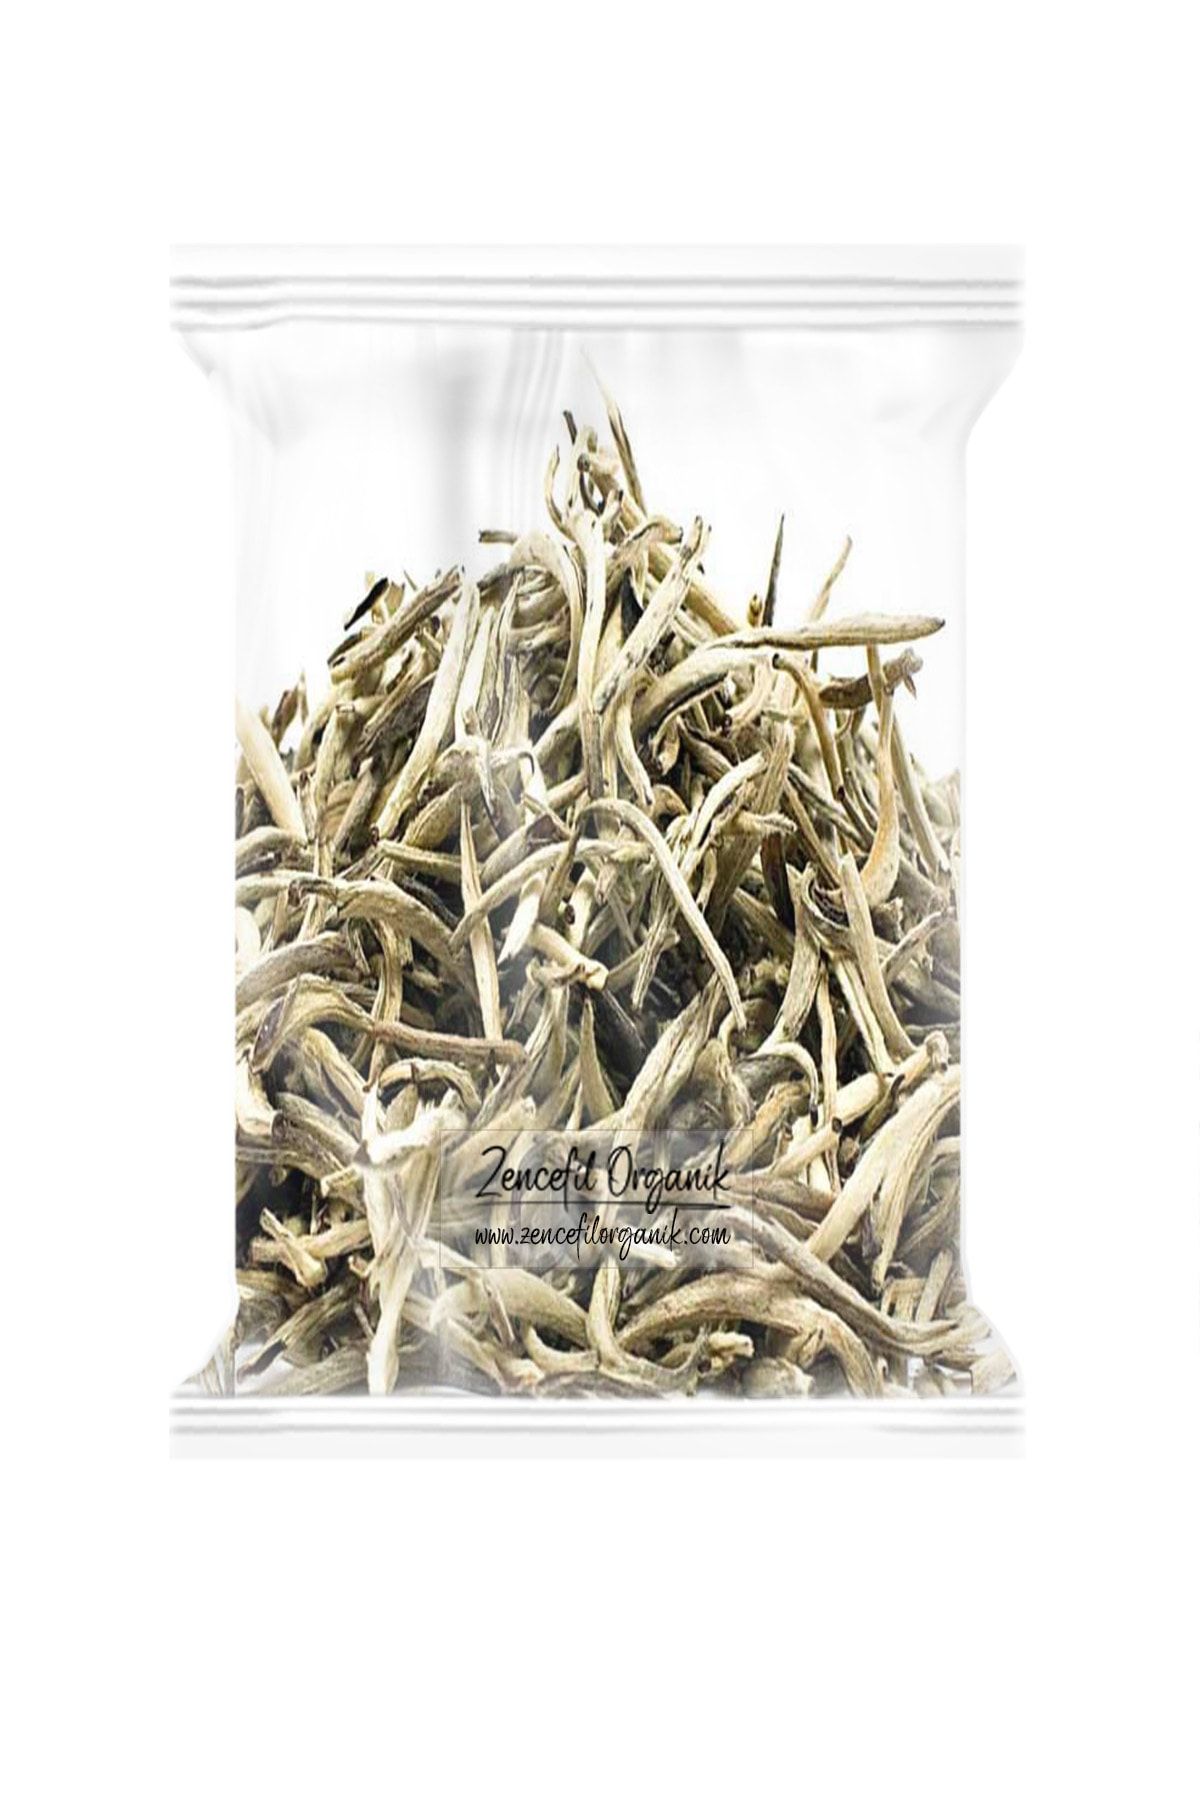 Zencefil Organik Beyaz Çay Yeni Mahsul A Kalite 100 Gr. White Tea Beyazçay Yaprağı